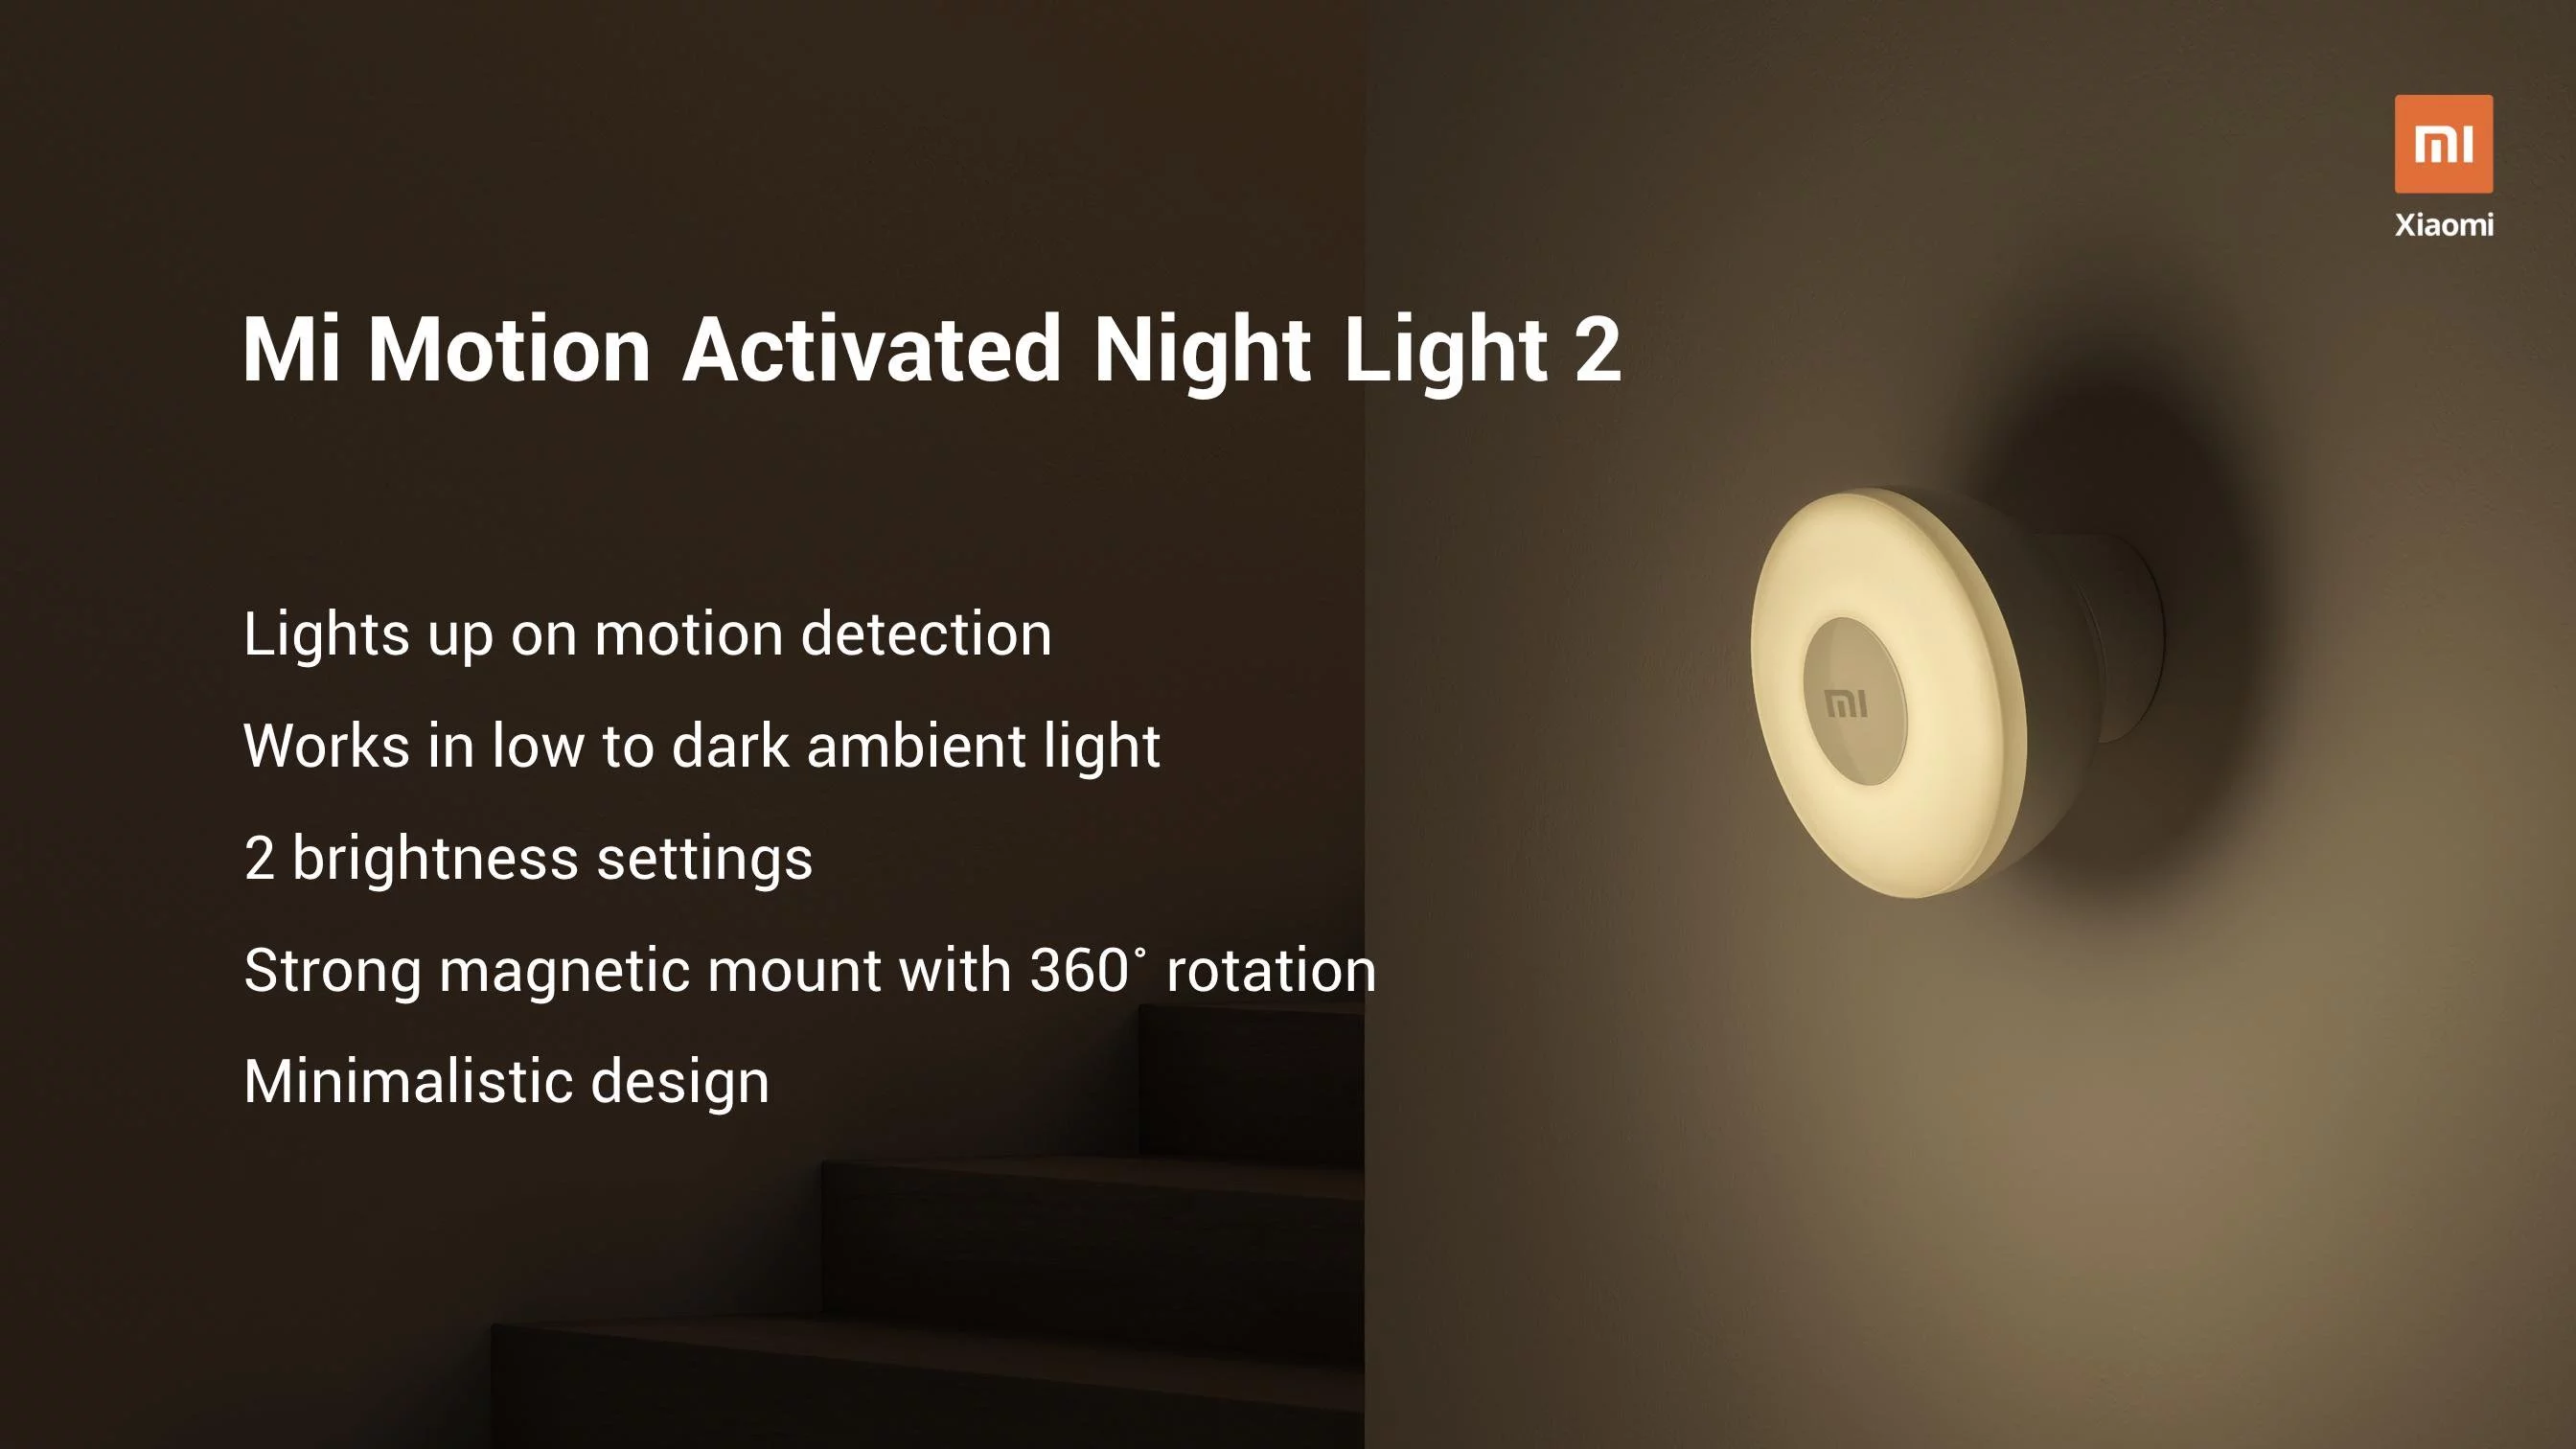 Mi motion night light. Xiaomi mi Motion-activated Night. Motion activated Night Light 2. Xiaomi Mijia Night Light 2. Xiaomi mi Motion-activated Night Light 2.